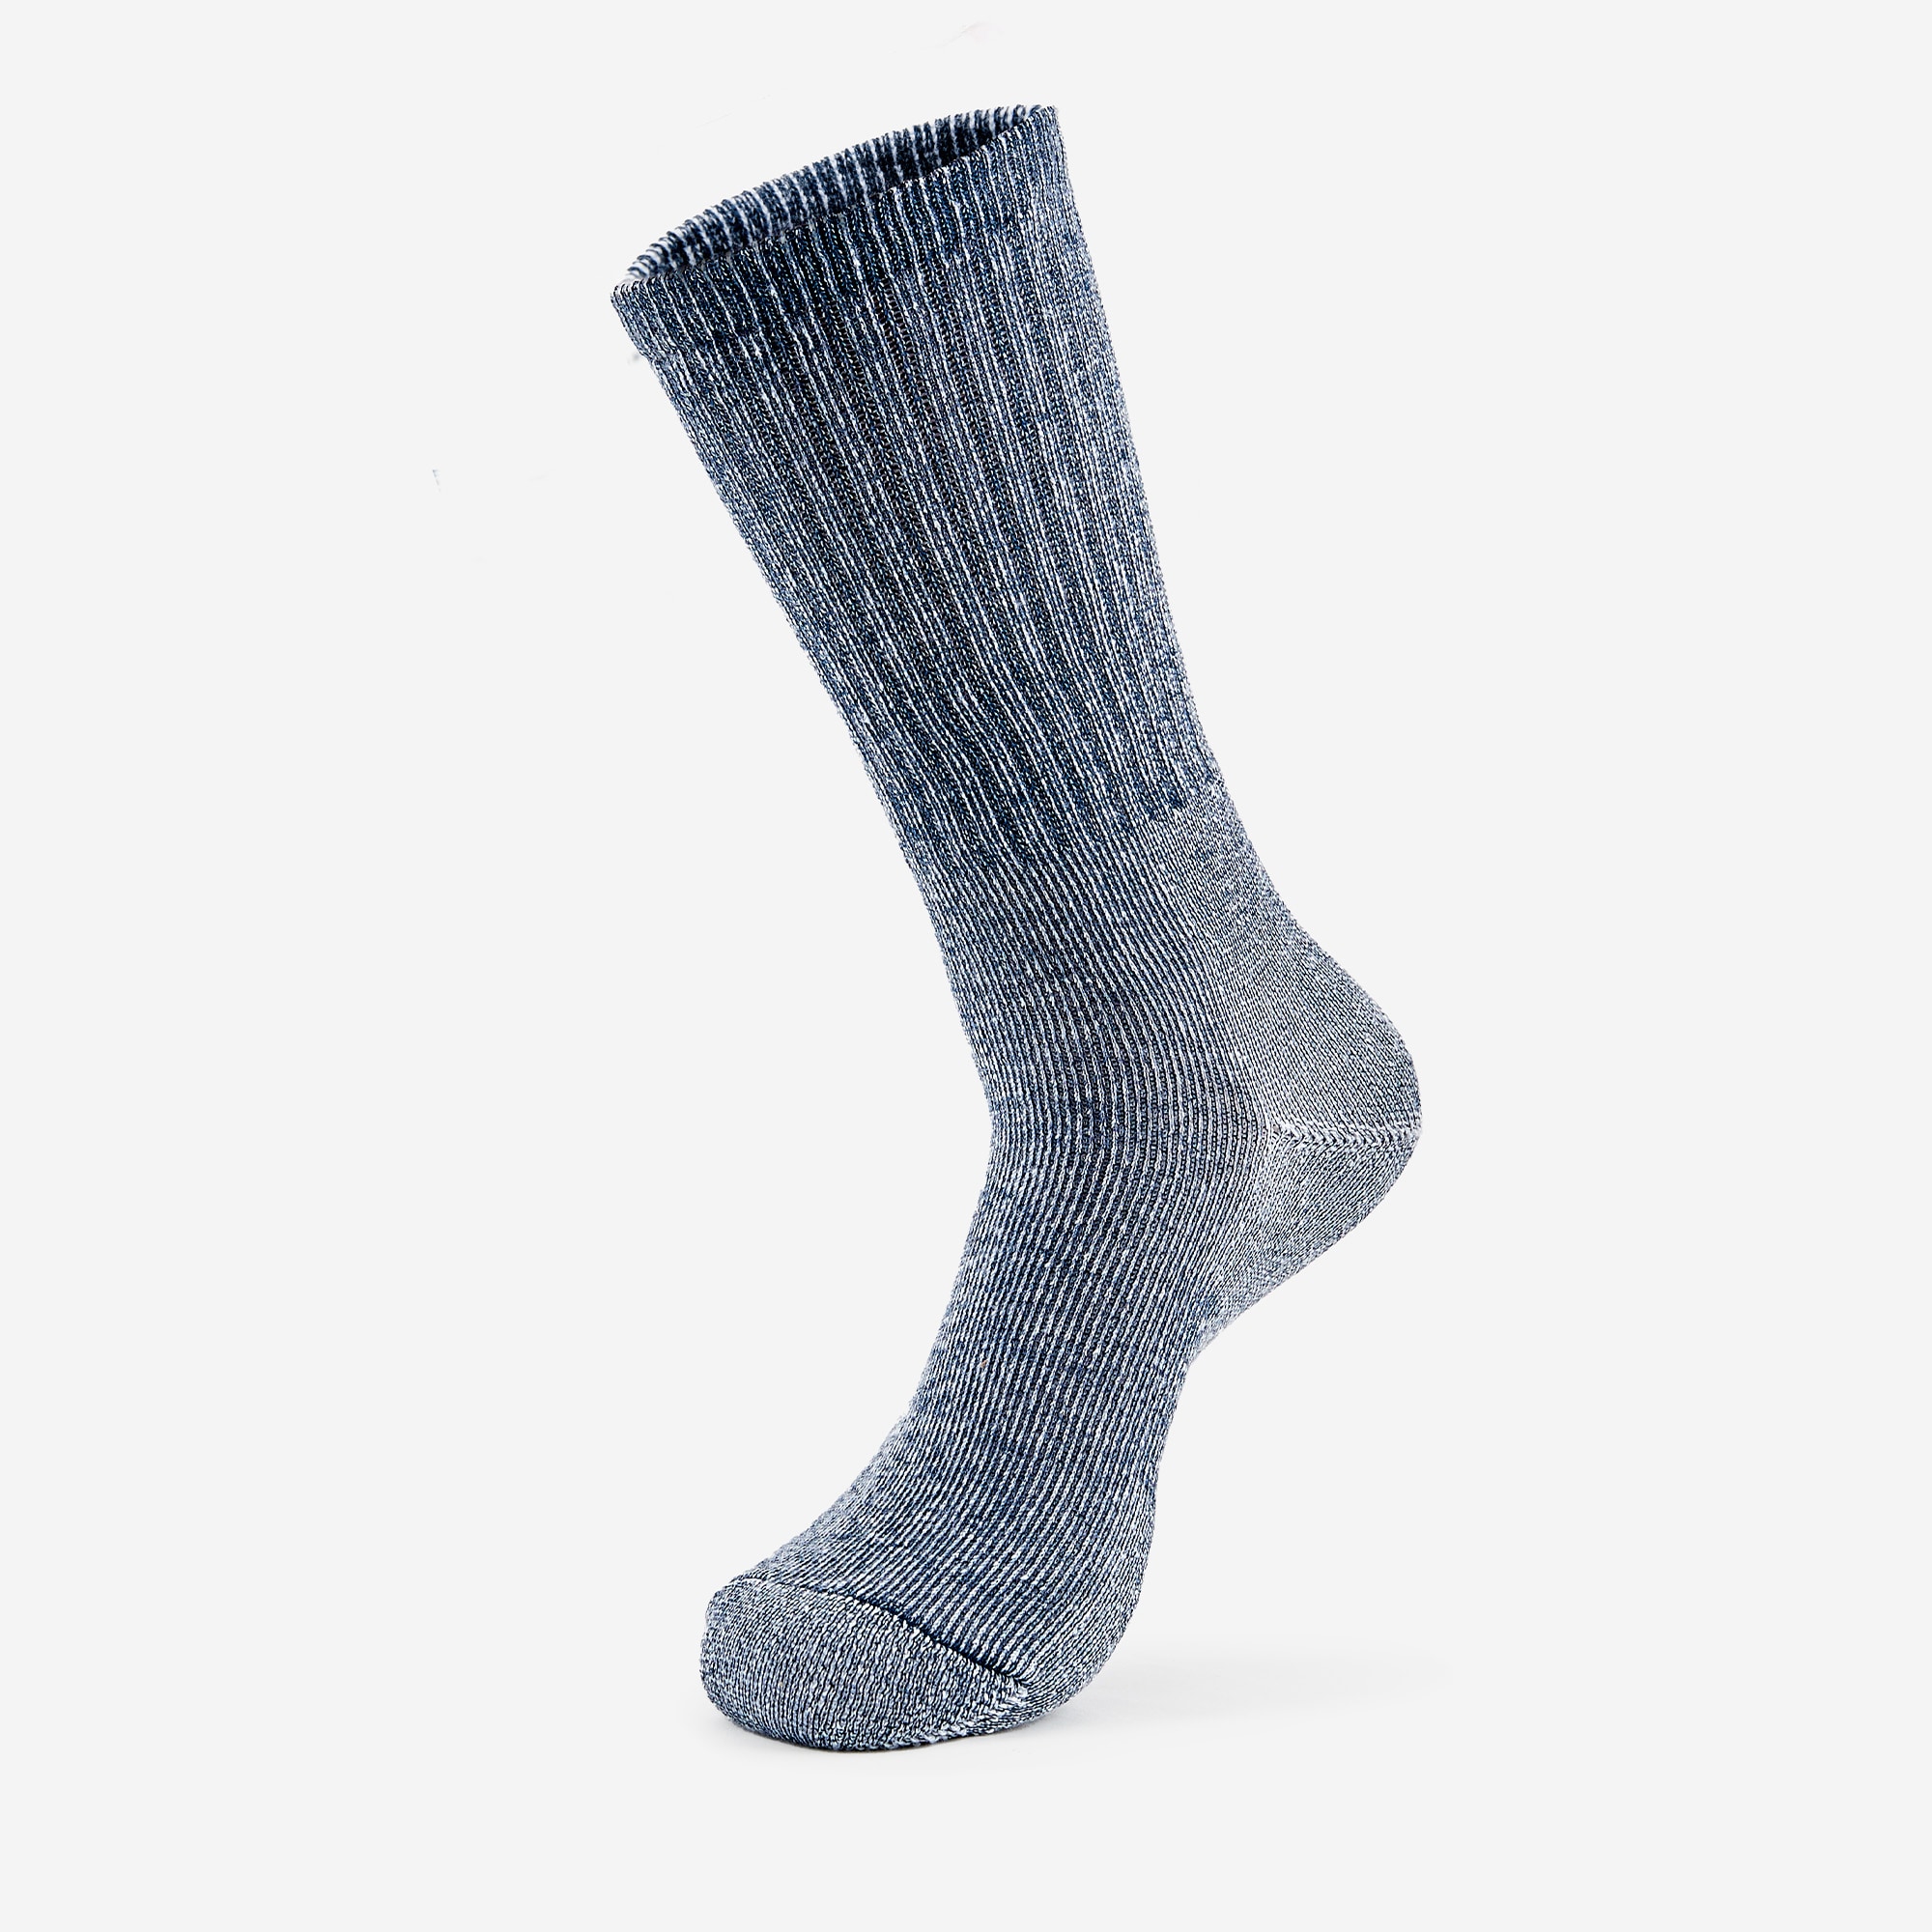 Thorlo Unisex Polyester Socks at Lowes.com